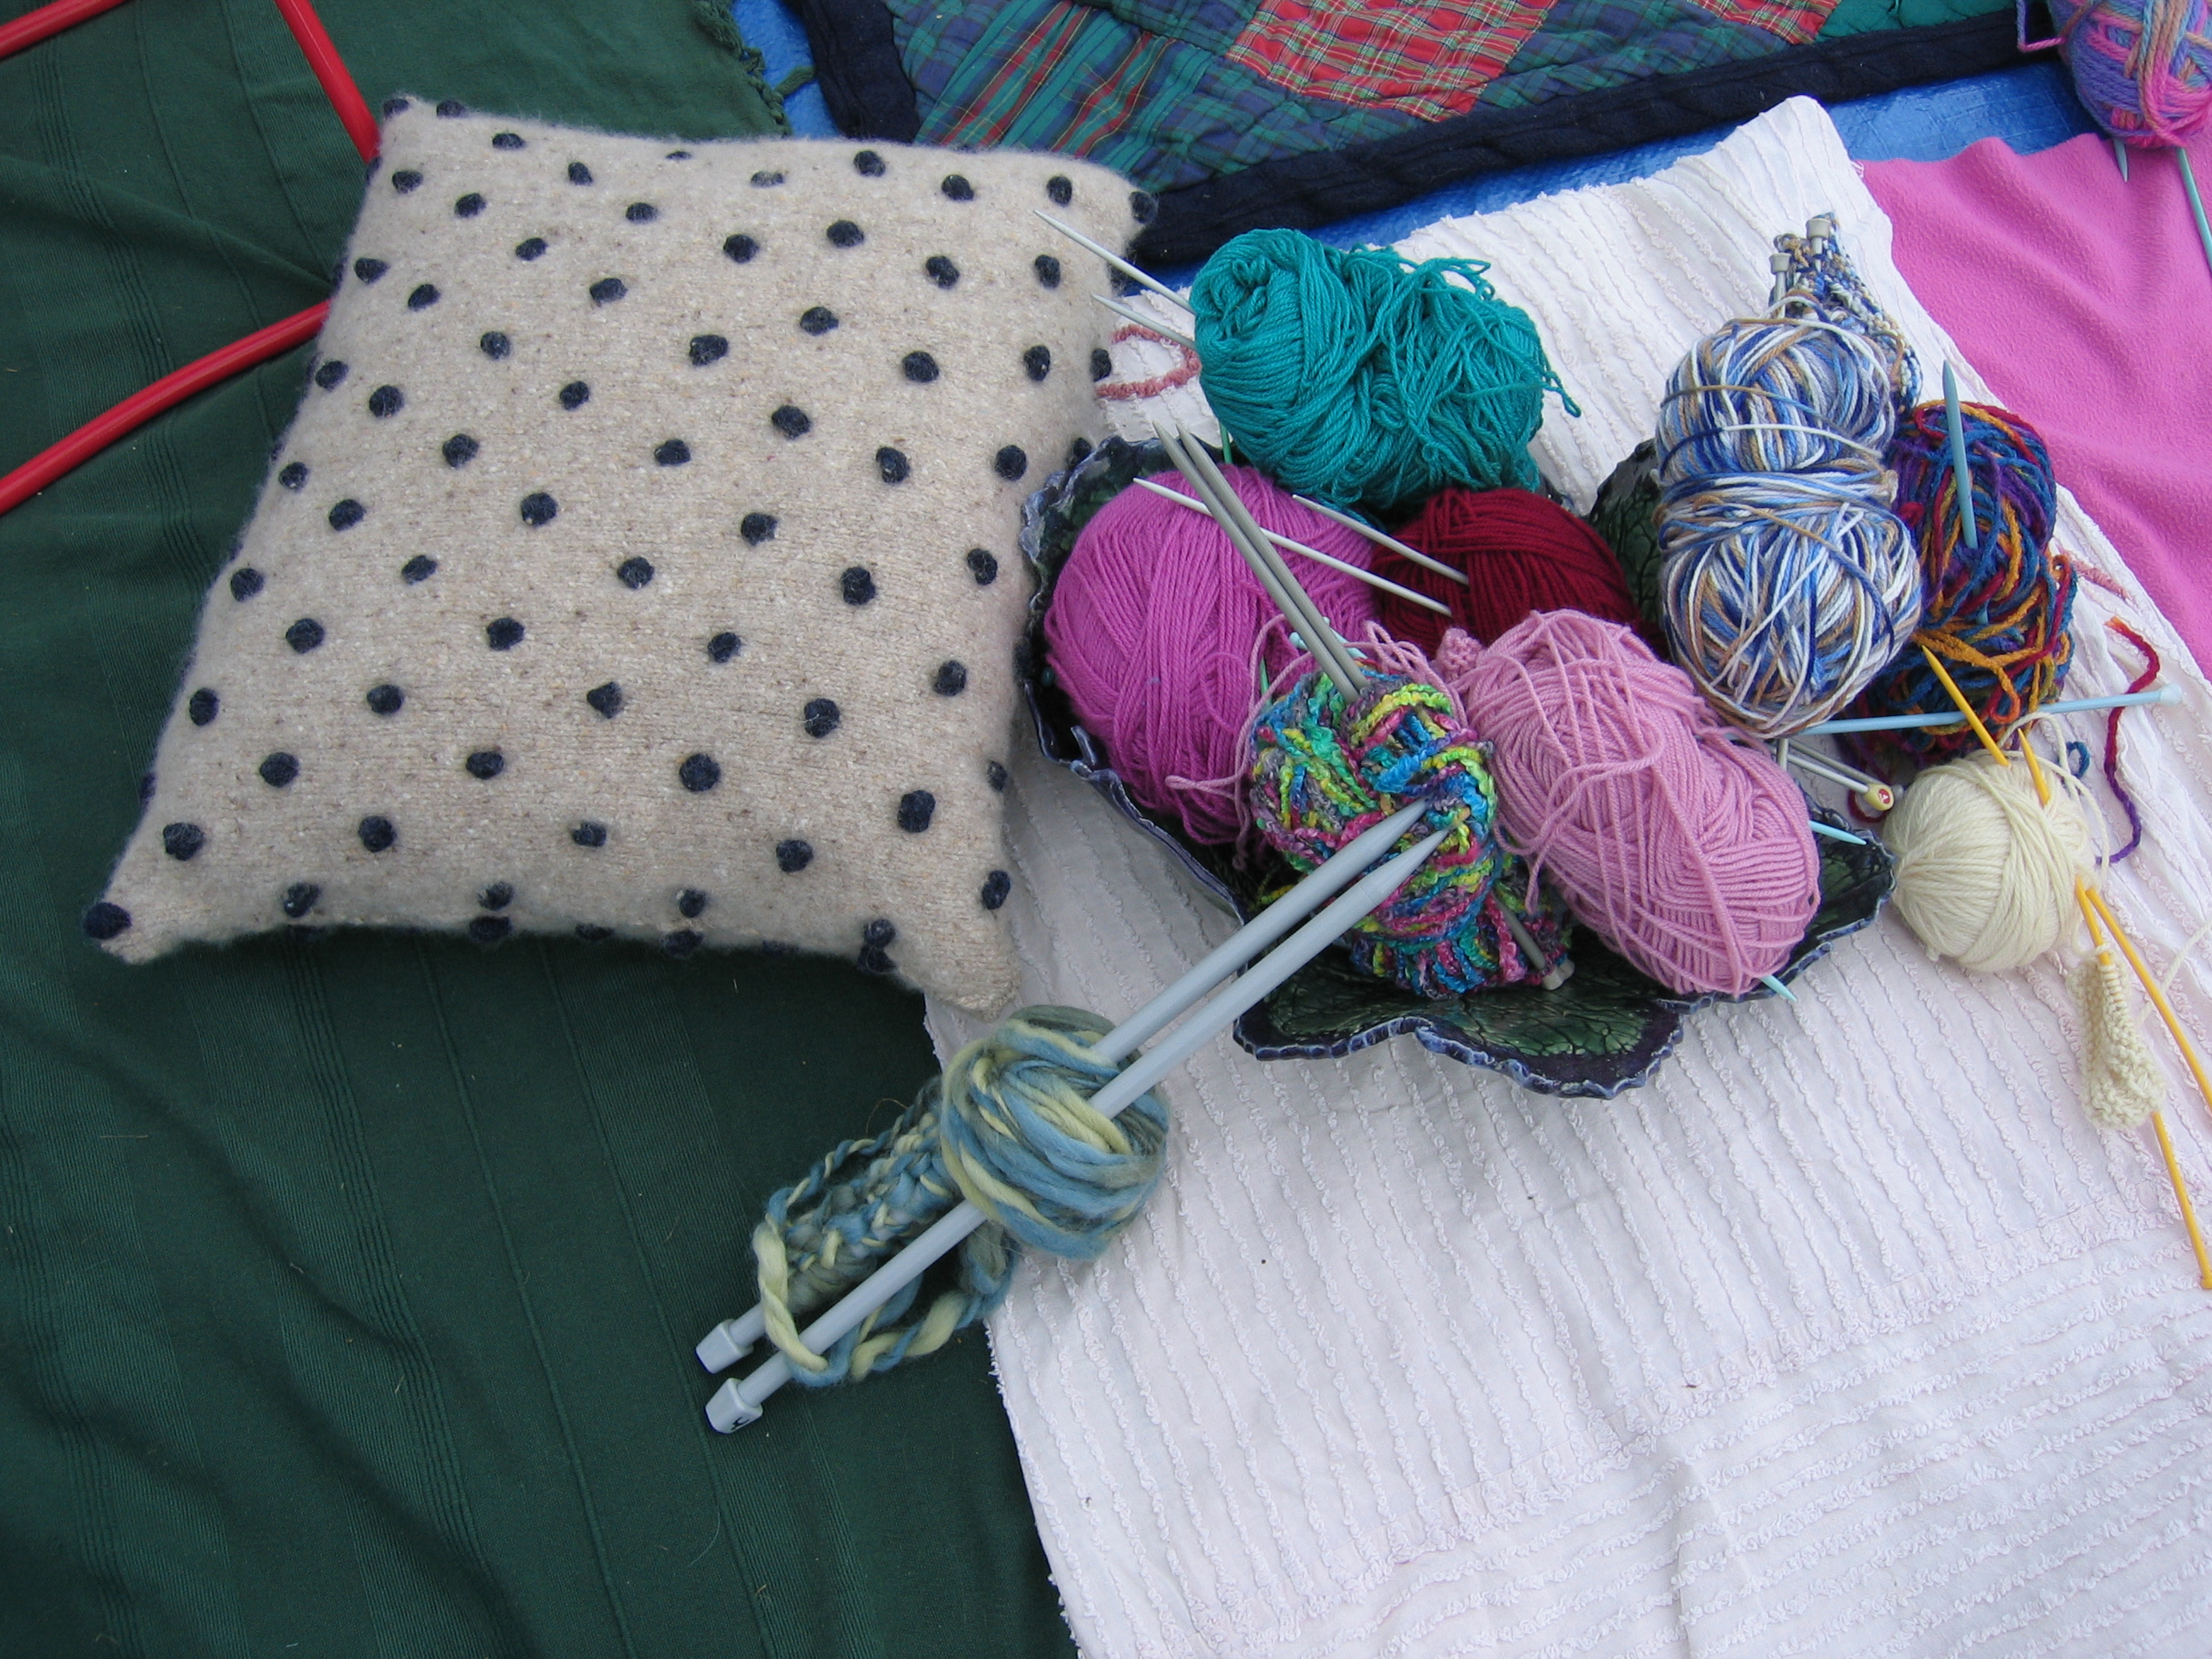 Knitting - wool and needles